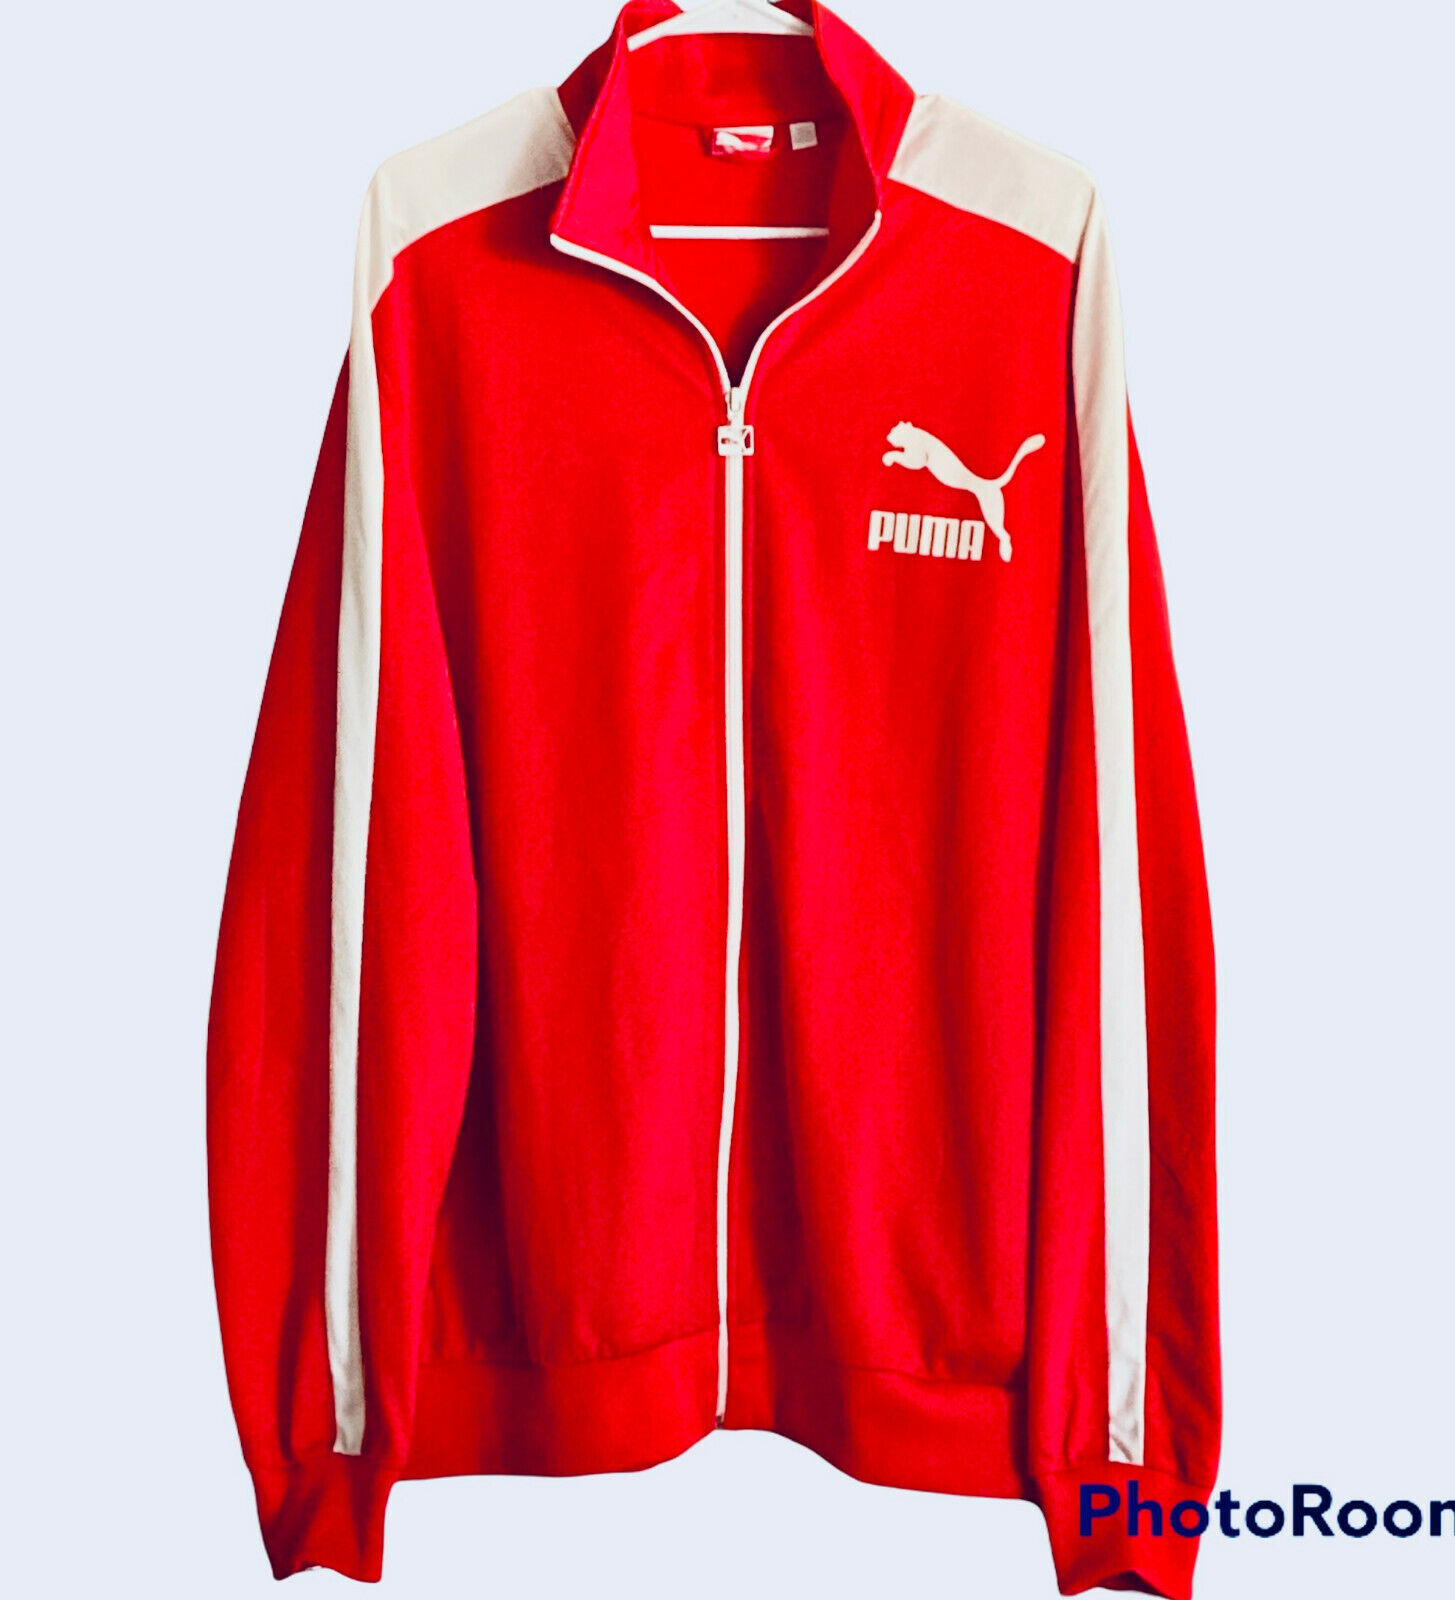 Men's Puma Track Red White Athletic 3XL Zip Retro Vintage style | eBay